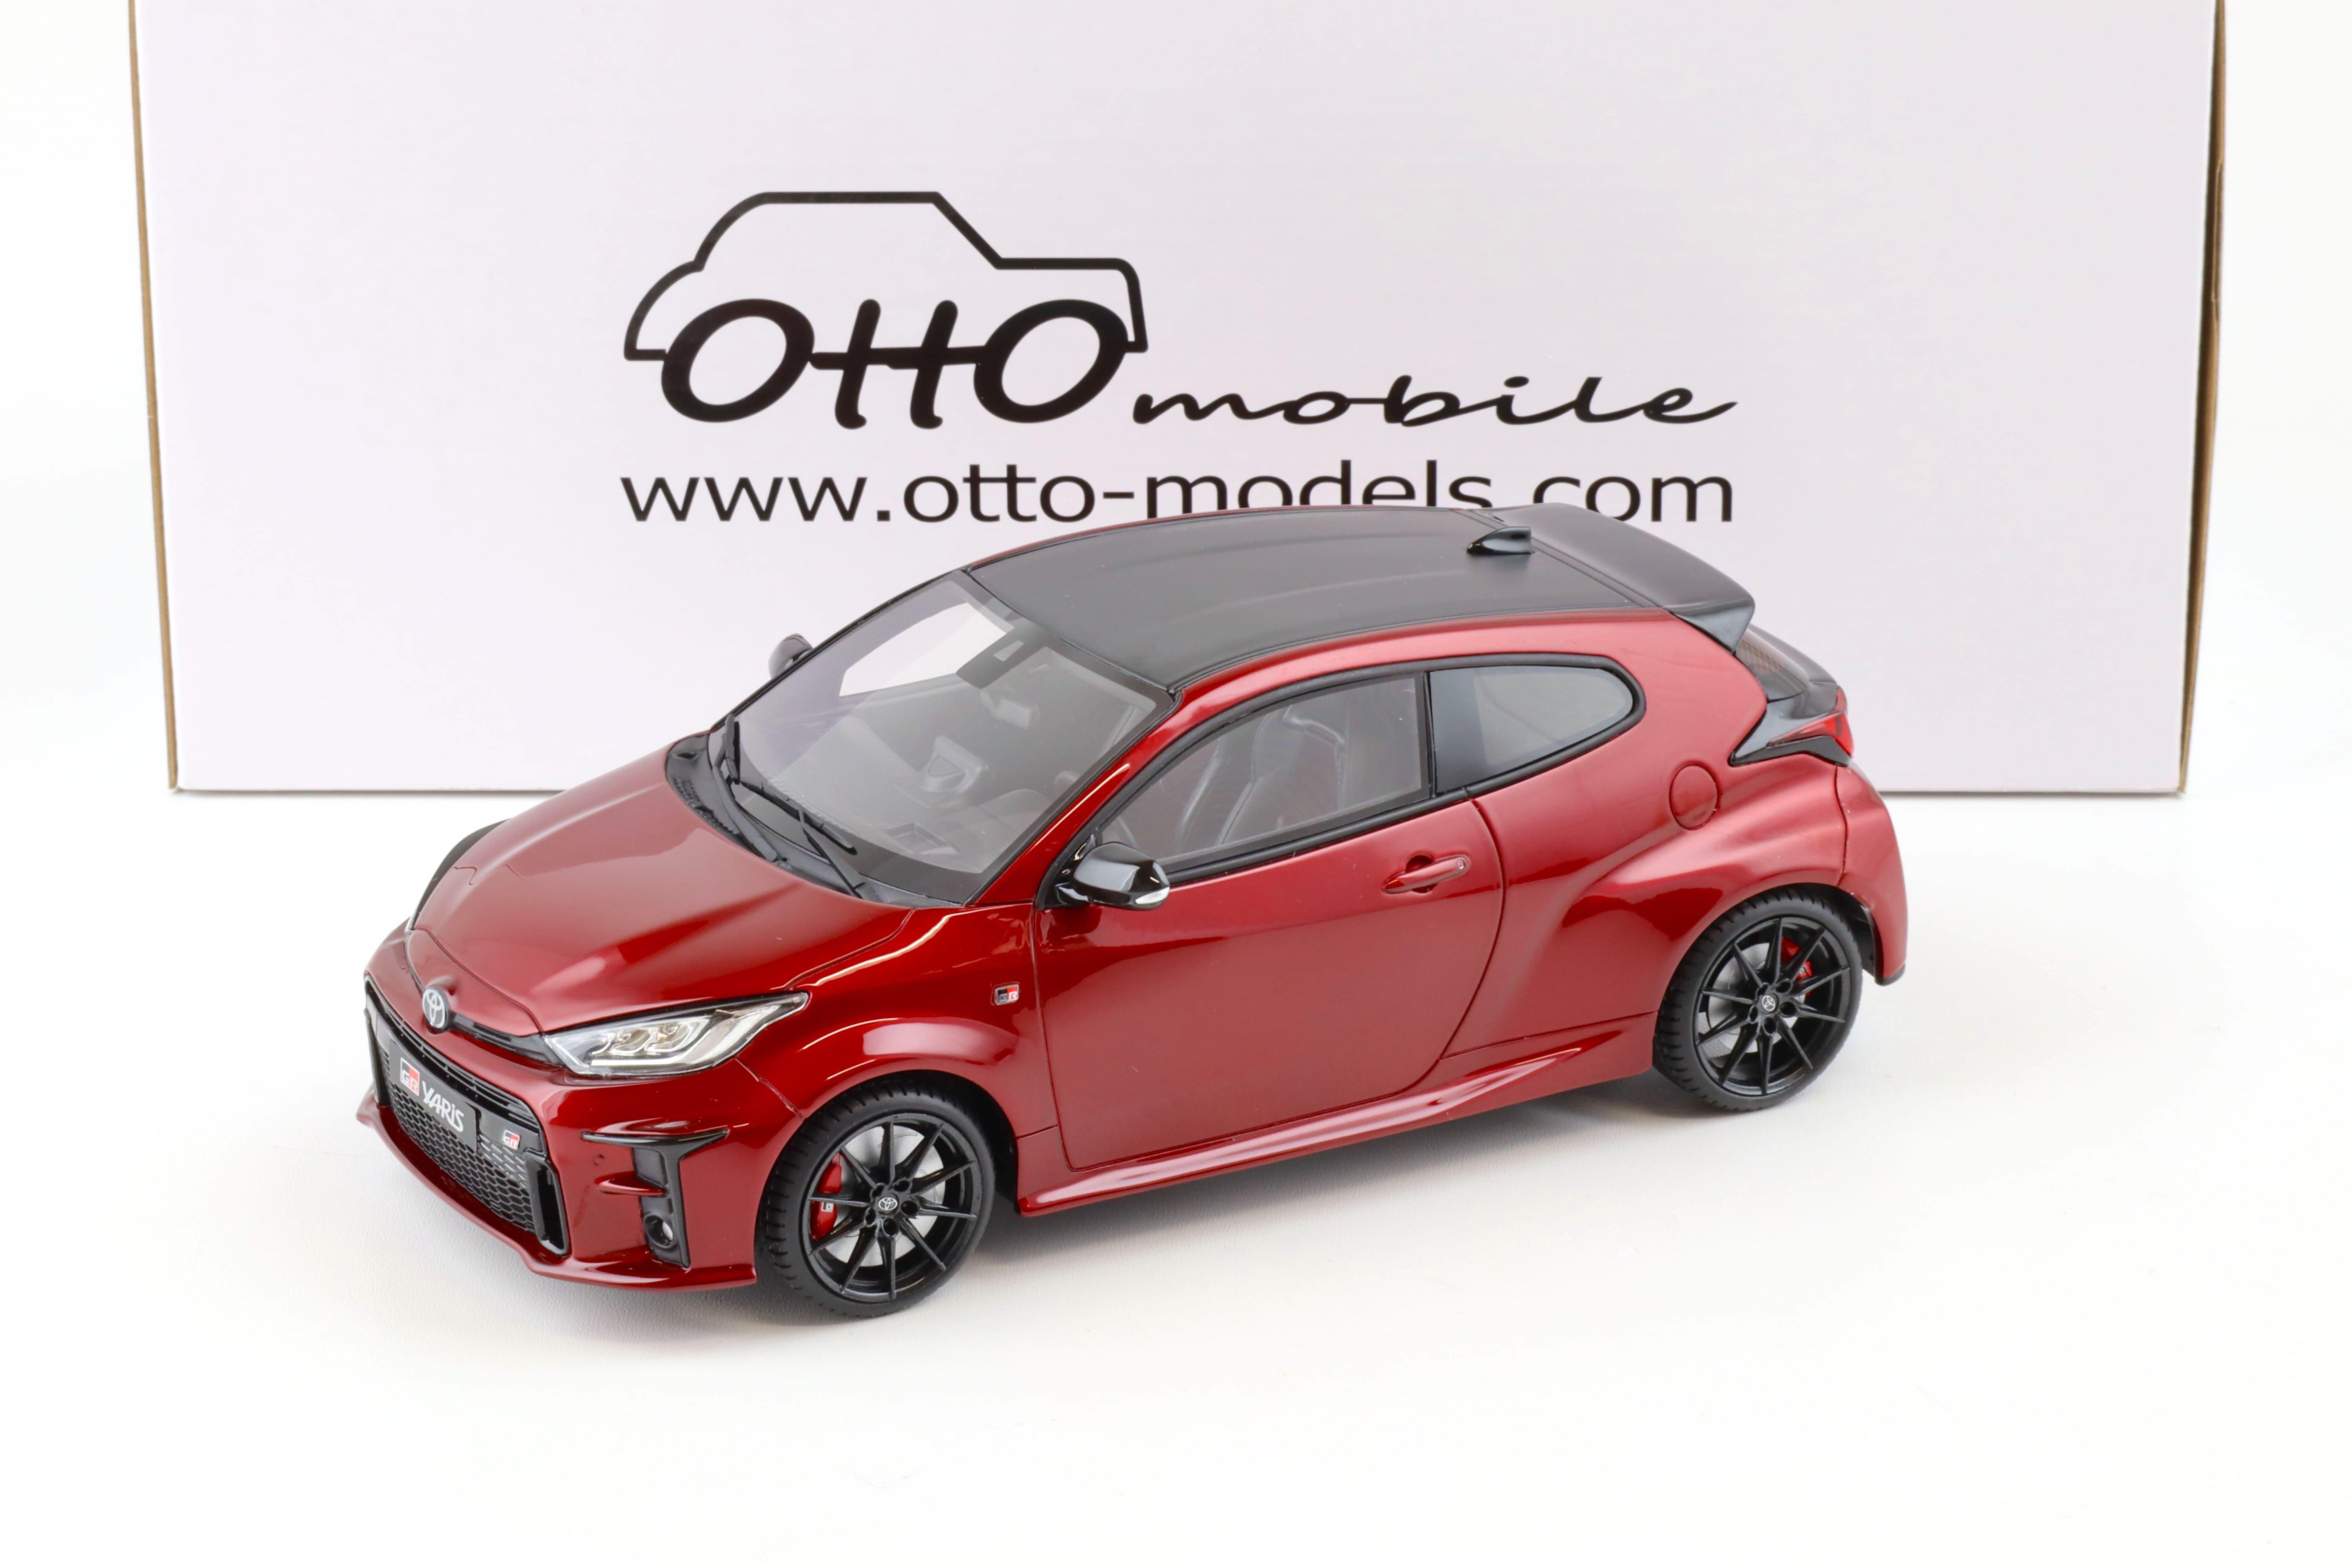 1:18 OTTO mobile OT1003 Toyota Yaris GR red metallic/ black 2021